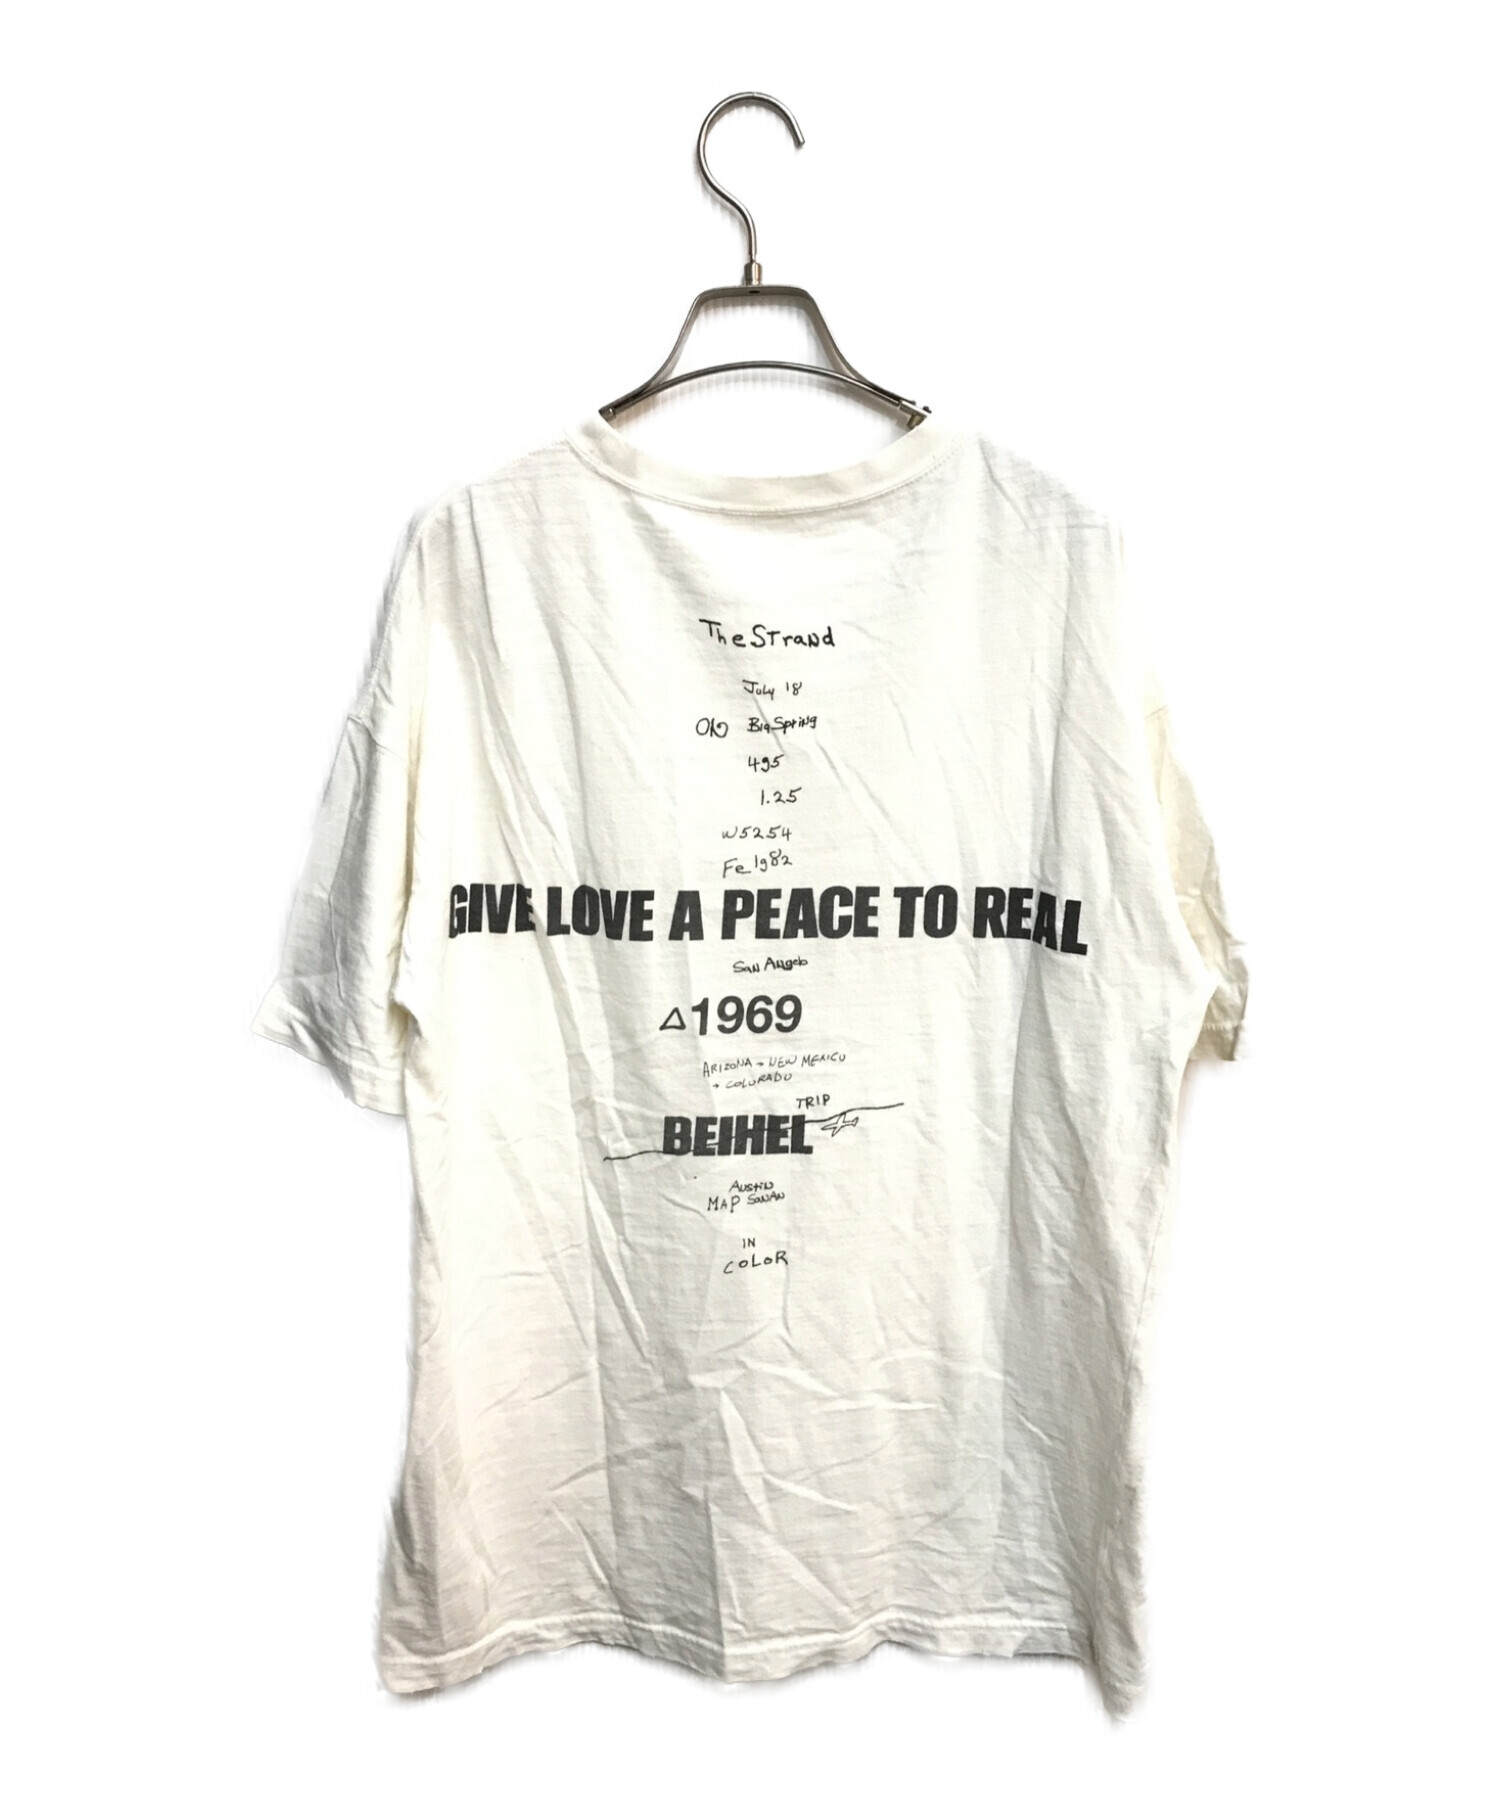 LOVE A PEACE バックプリントTシャツ